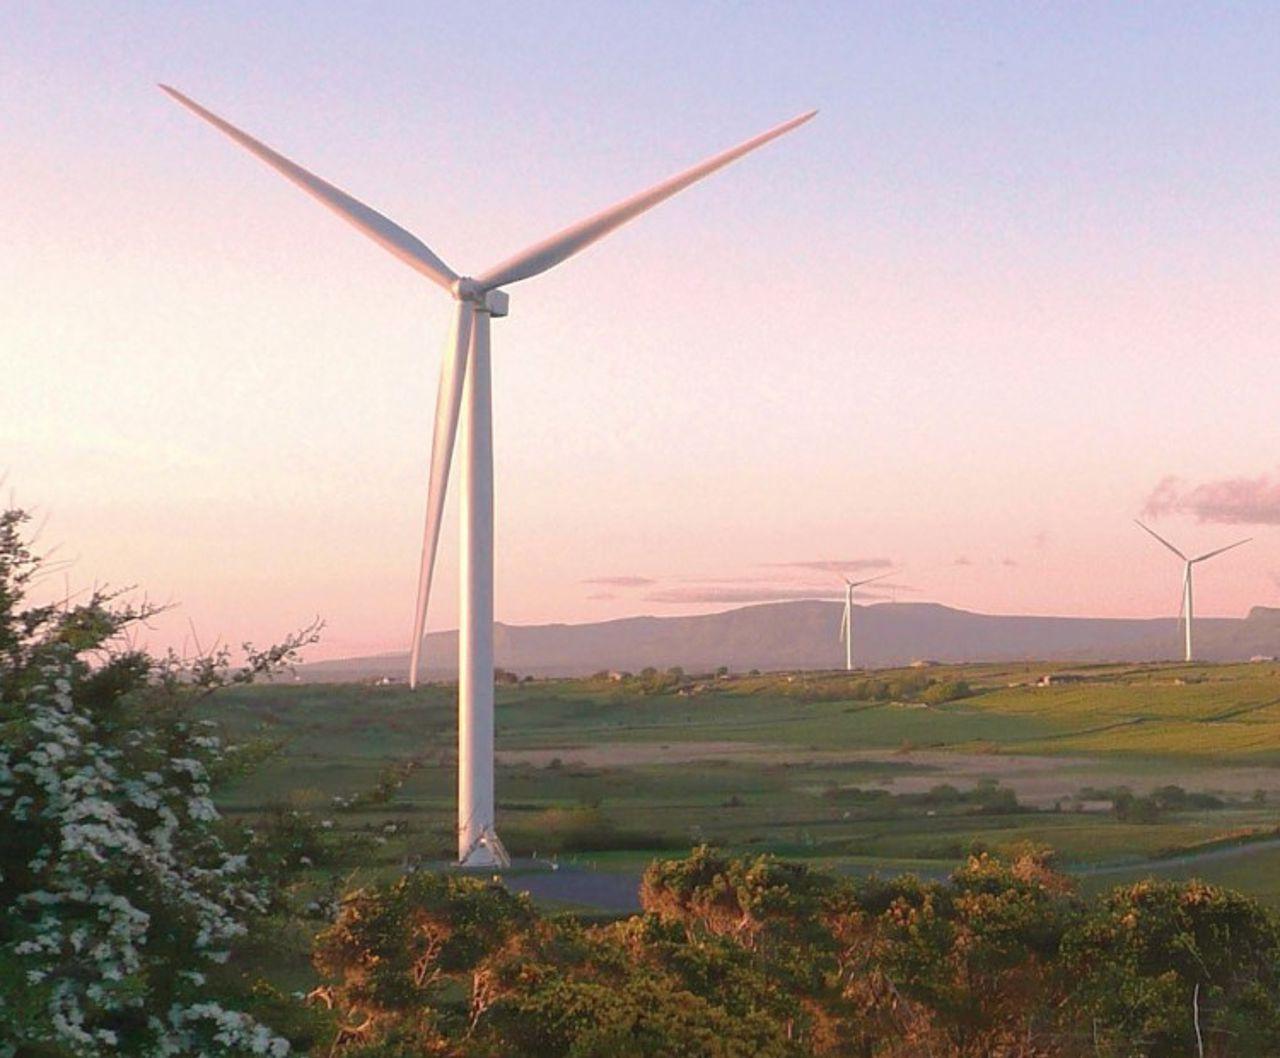 Wind turbines in Ireland